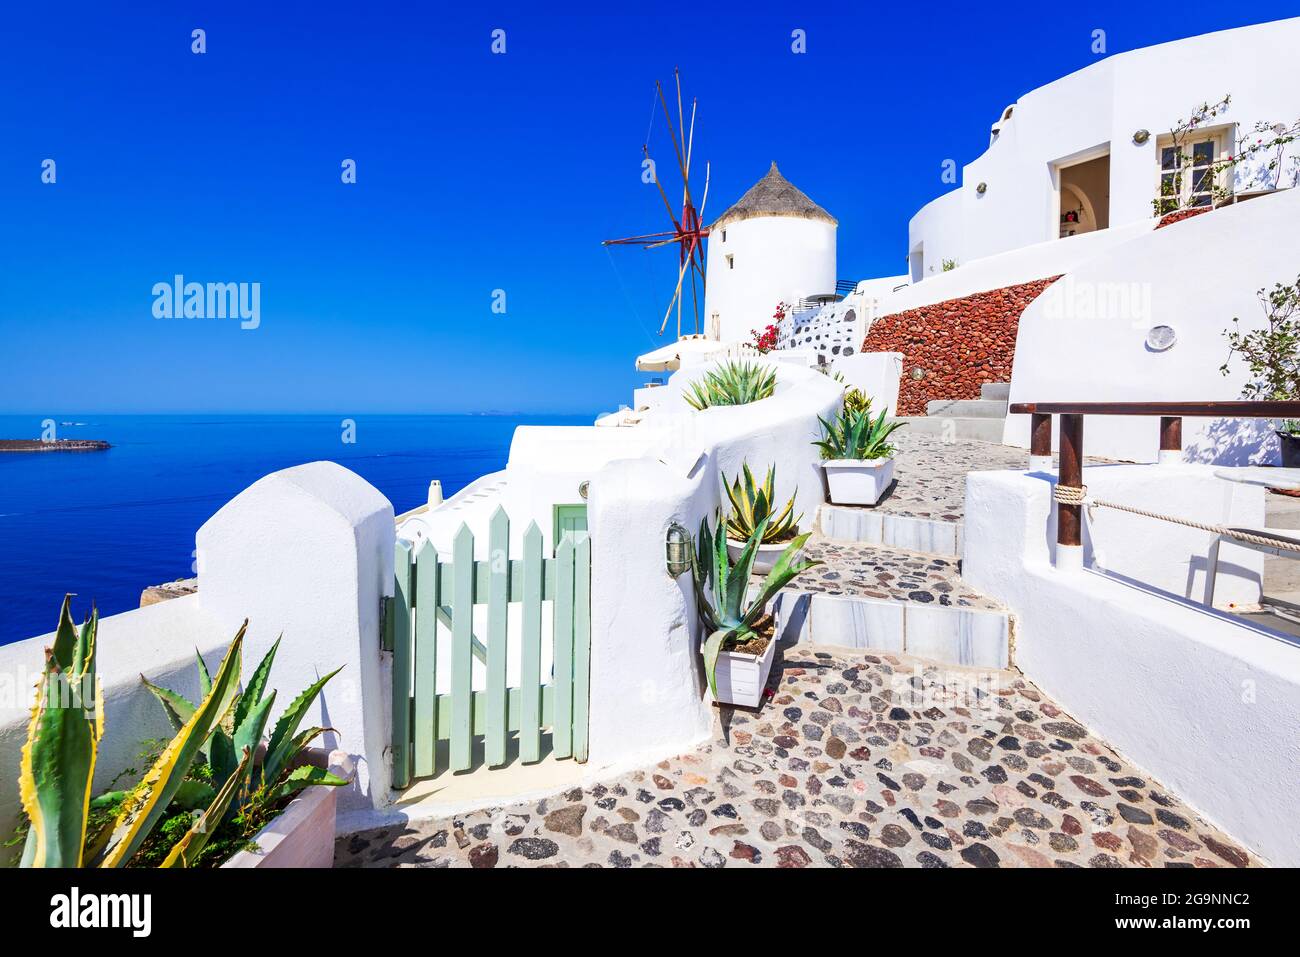 Oia - Santorini, Greece. Amazing whitewashed city on Thira island, Greek Cyclades, Aegean Sea. Holiday destinations of Europe. Stock Photo